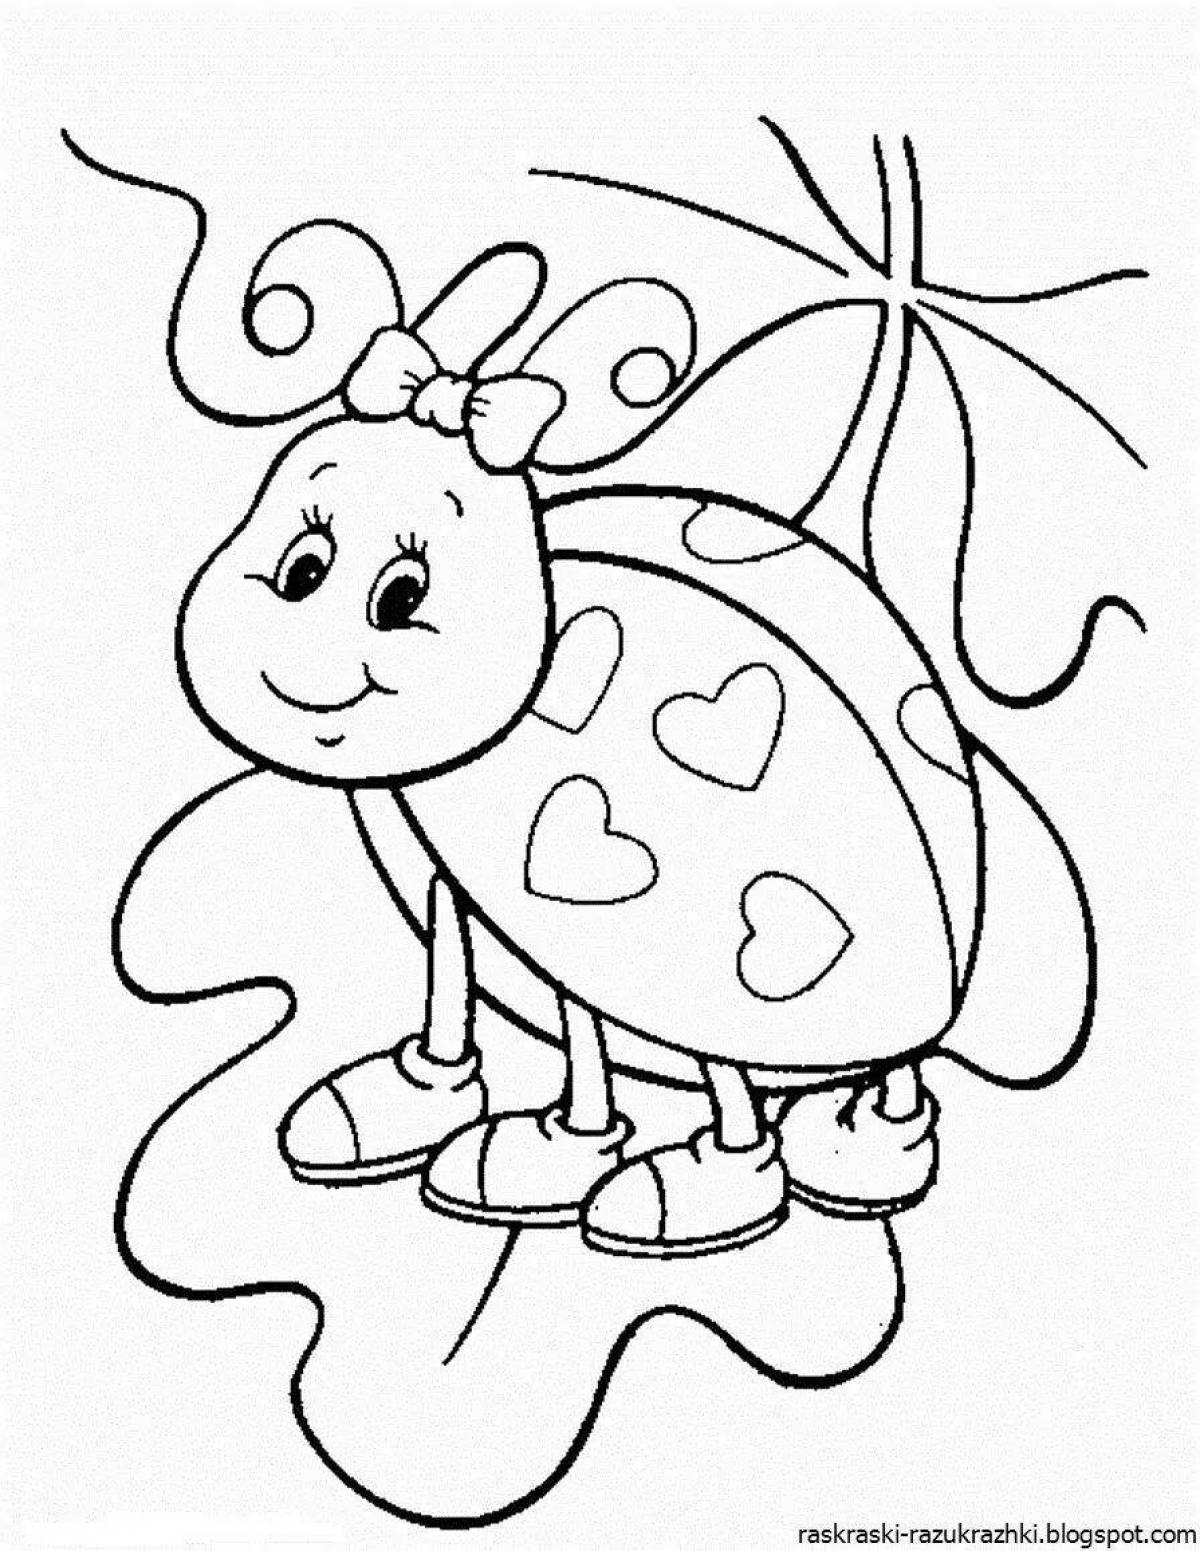 Playful ladybug coloring page for kids